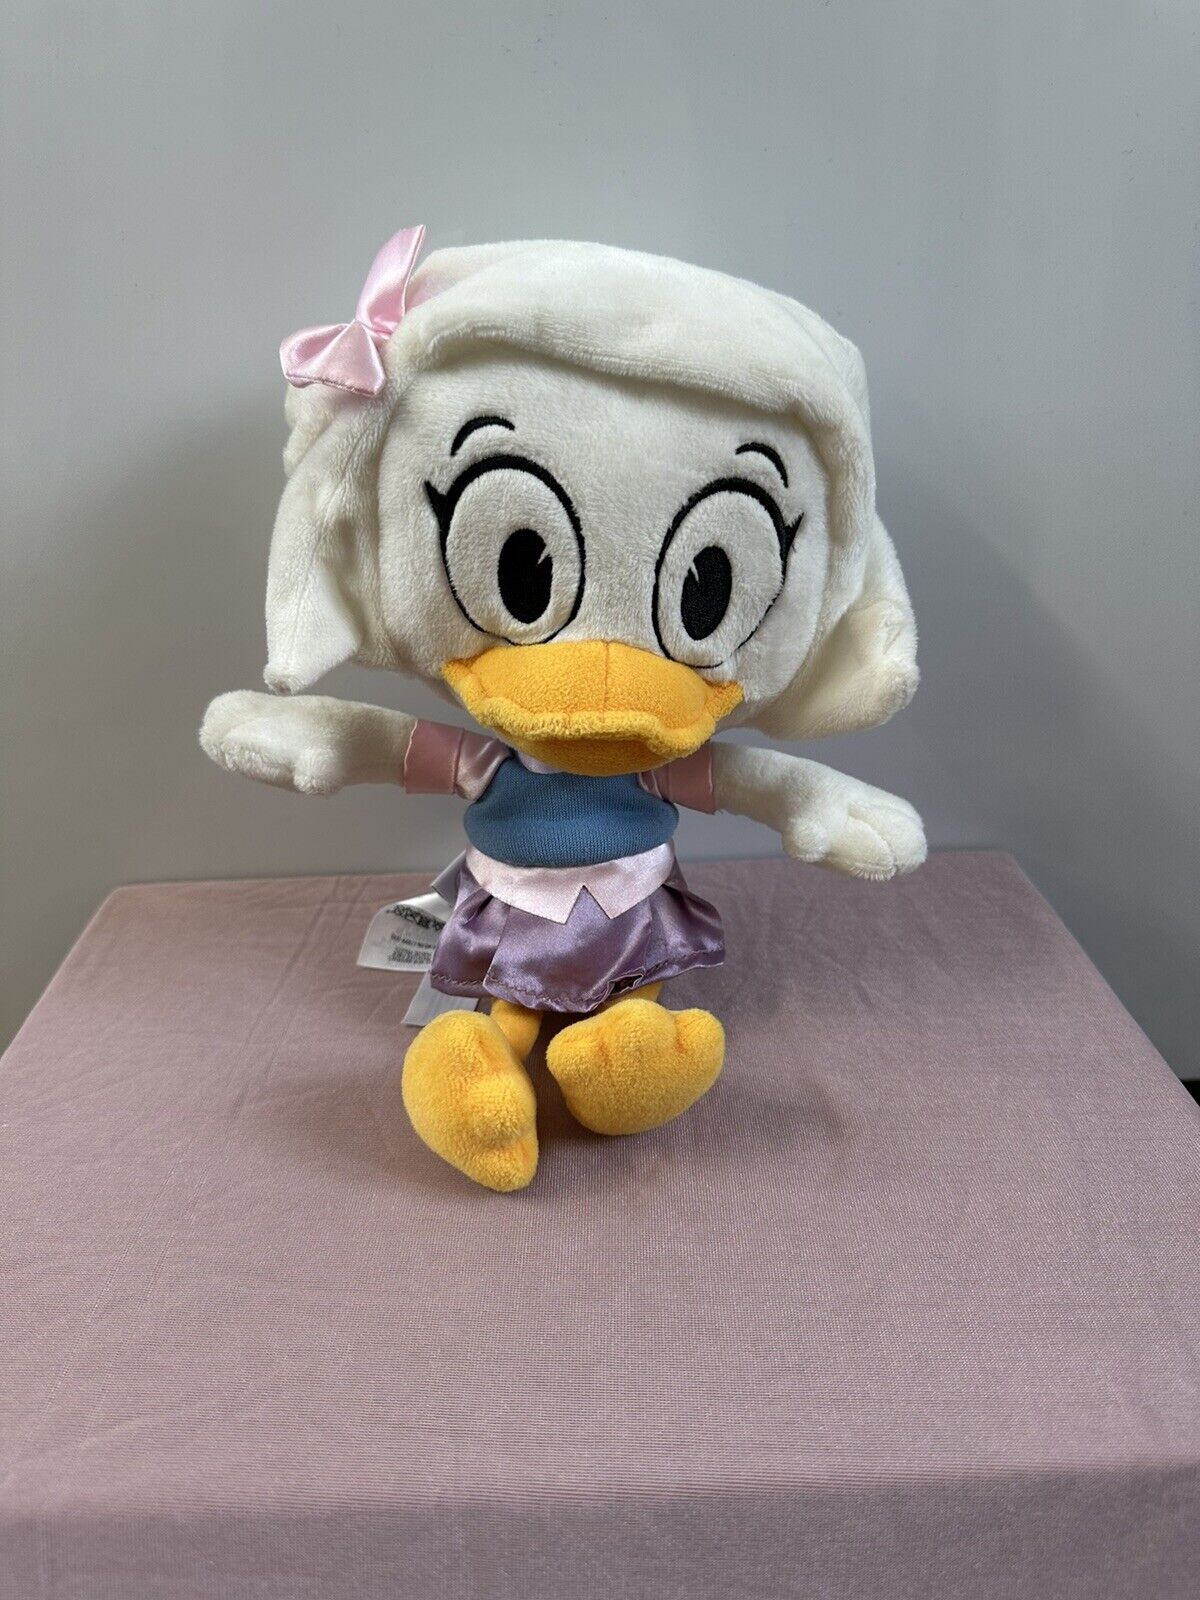 Disney Store Webby Vanderquack  DuckTales 11”Plush Stuffed Animal.